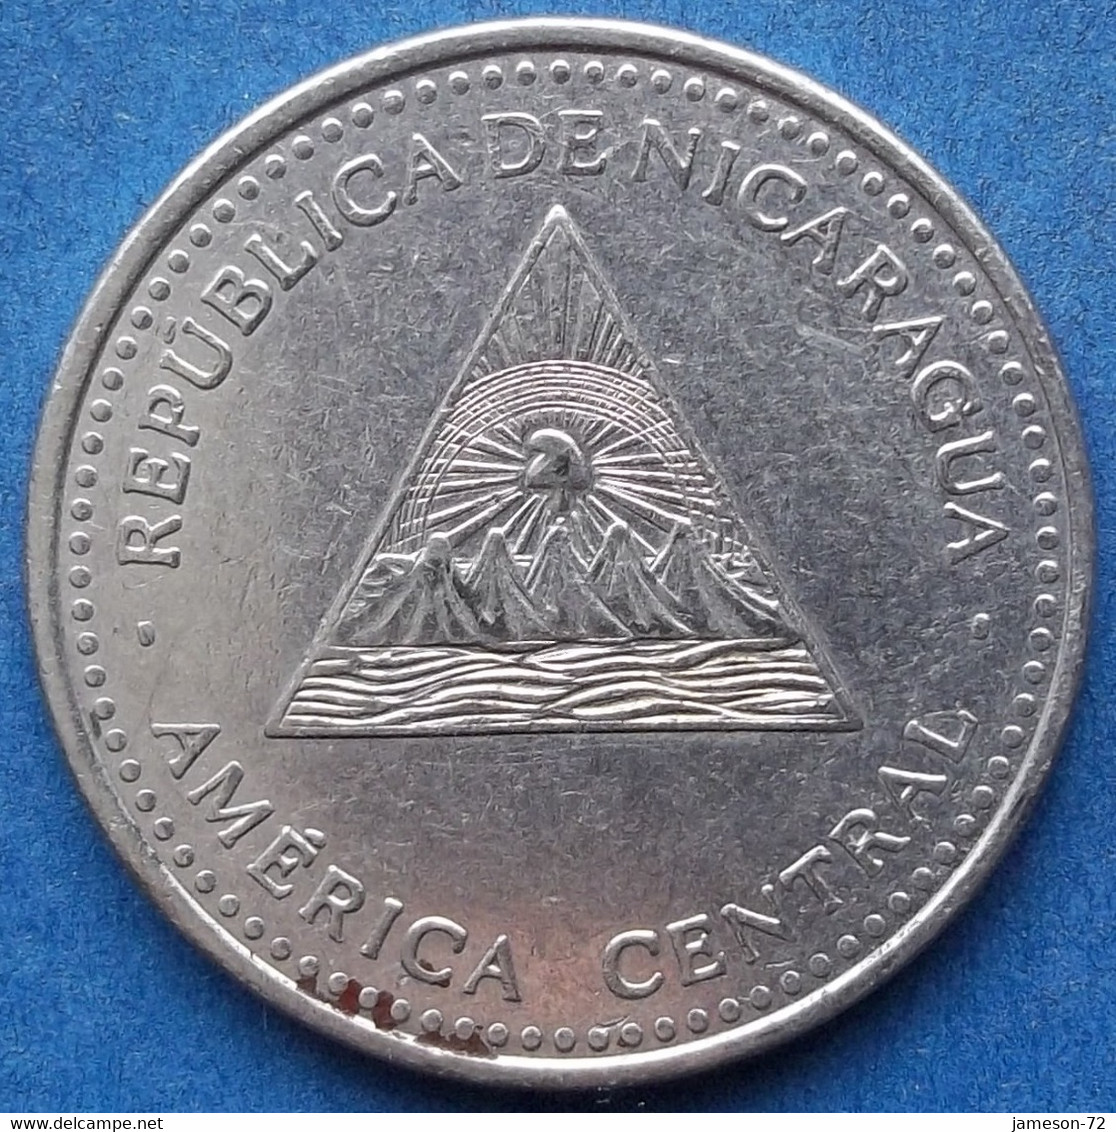 NICARAGUA - 1 Cordoba 2007 KM# 101 Monetary Reform (1912) - Edelweiss Coins - Nicaragua